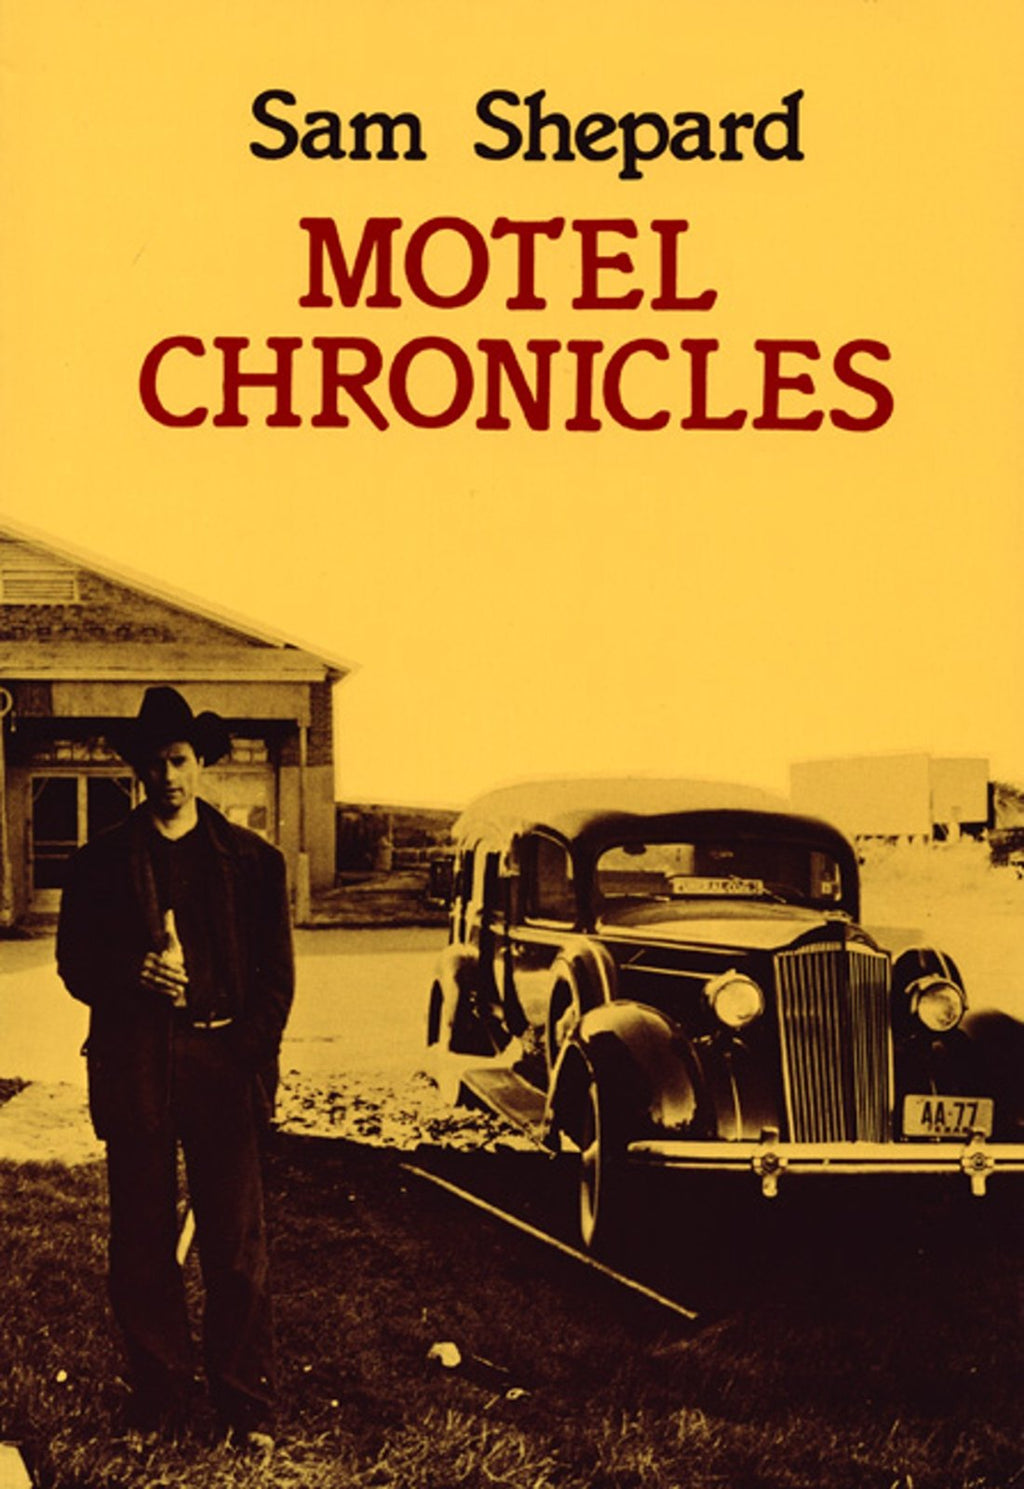 Motel Chronicles by Sam Shepard